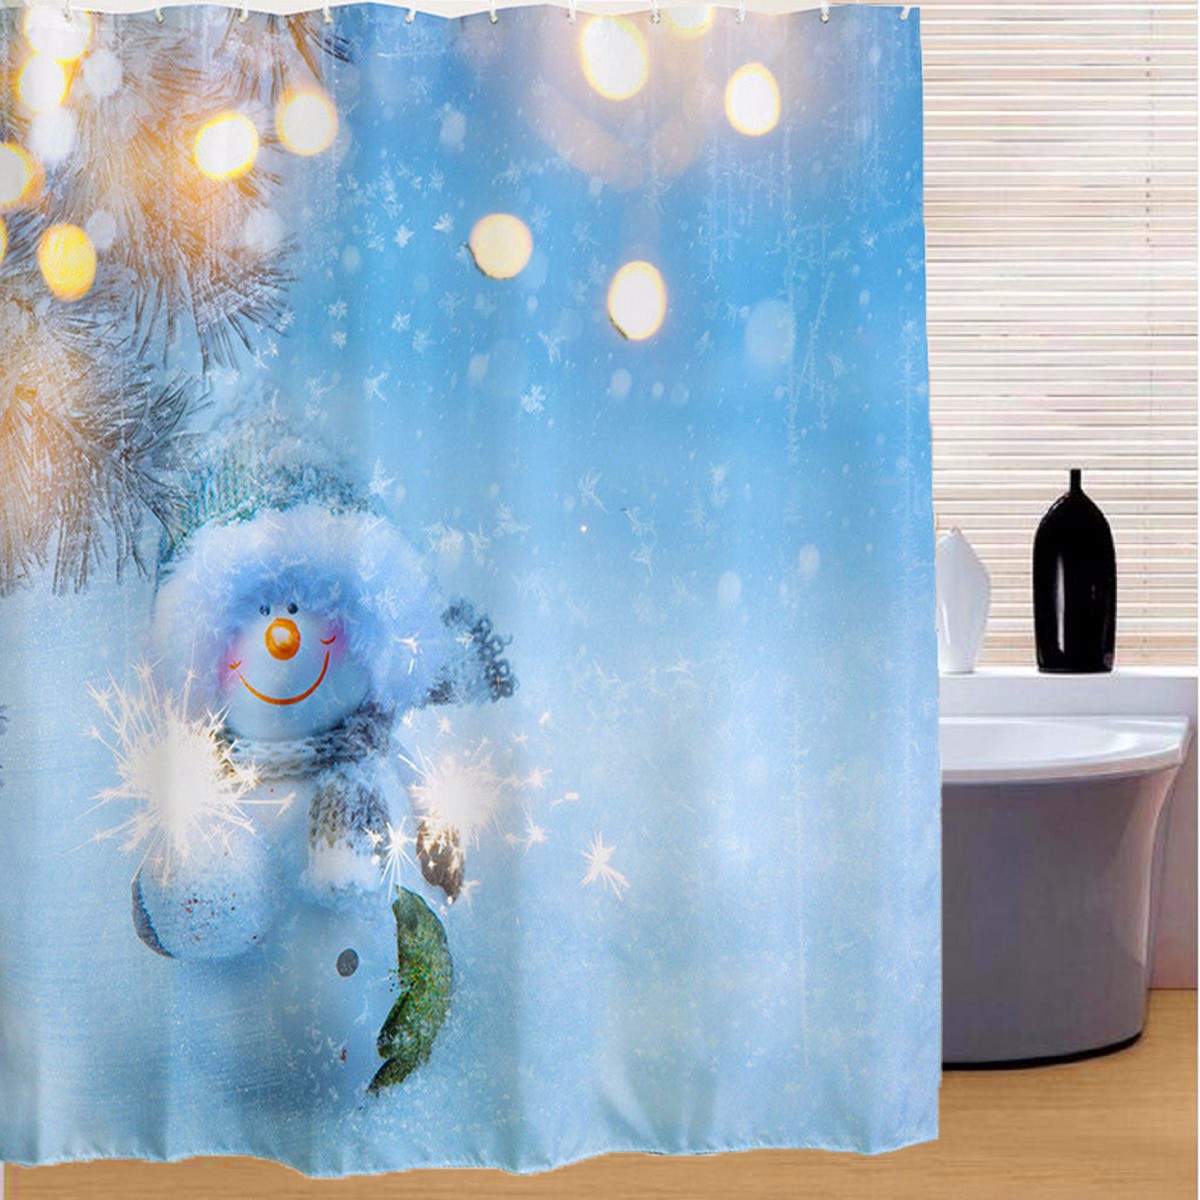 180x180cm Snowman Pattern Waterproof Polyester Shower Curtain Bathroom Decor with 12 Hooks